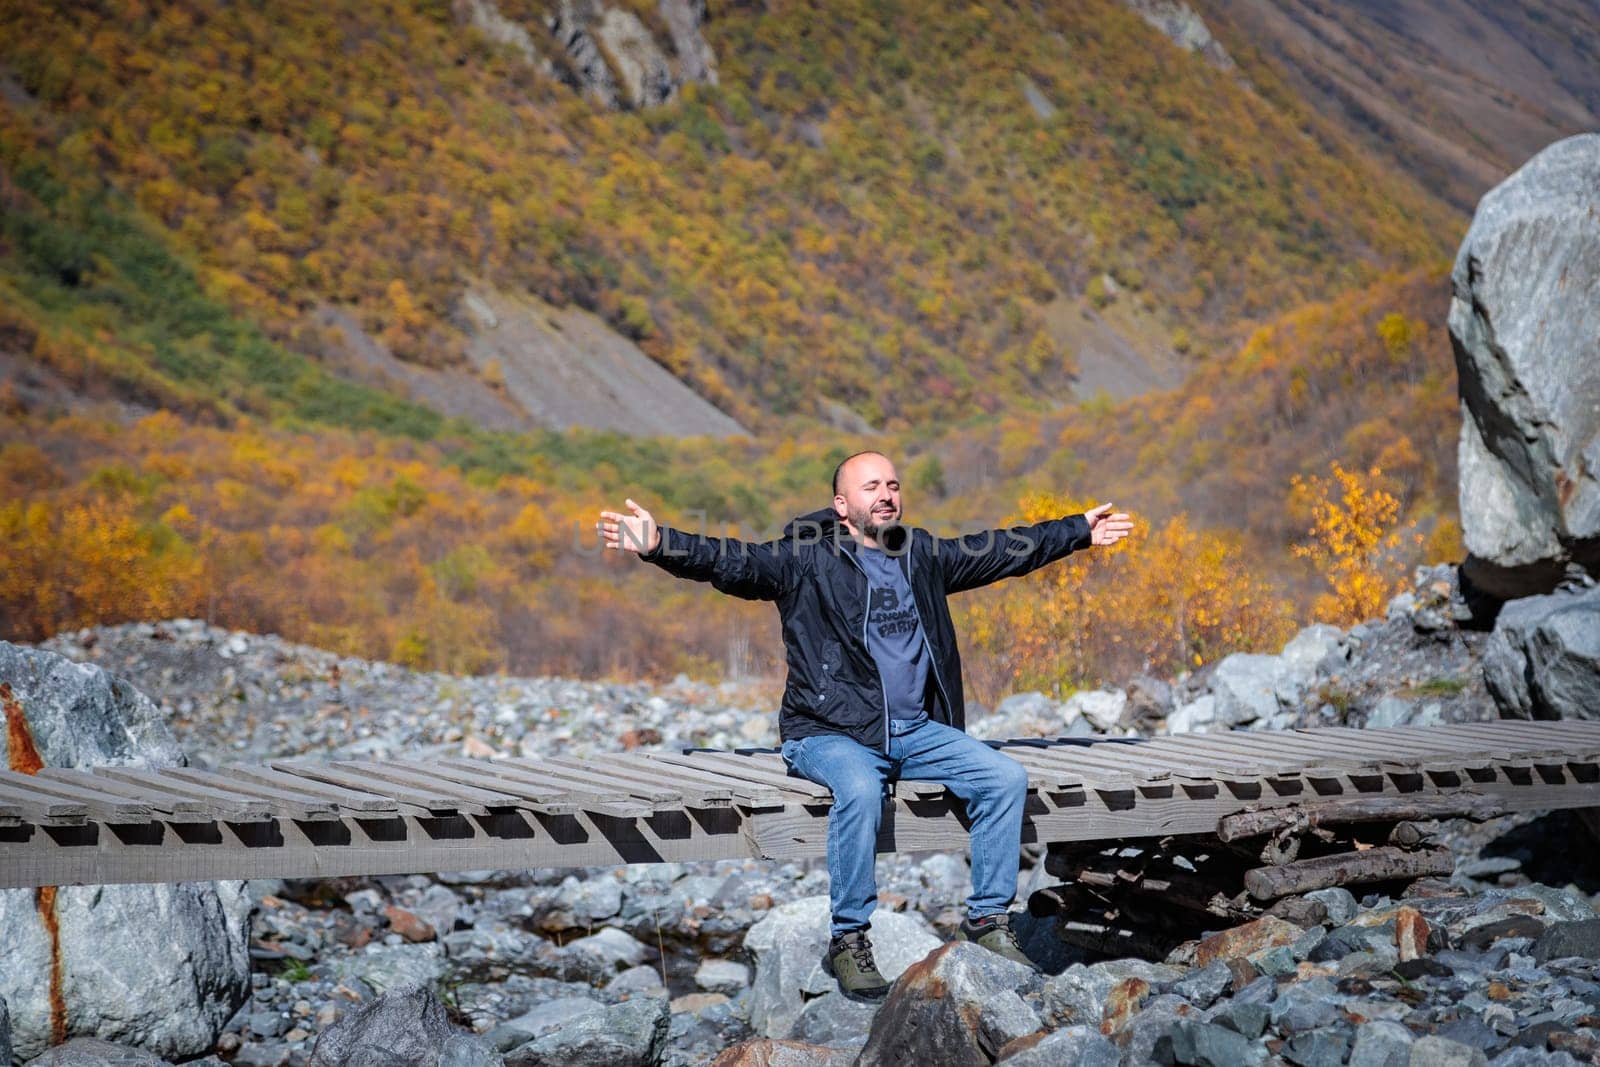 Man enjoying nature while sitting on bridge in mountains by Yurich32